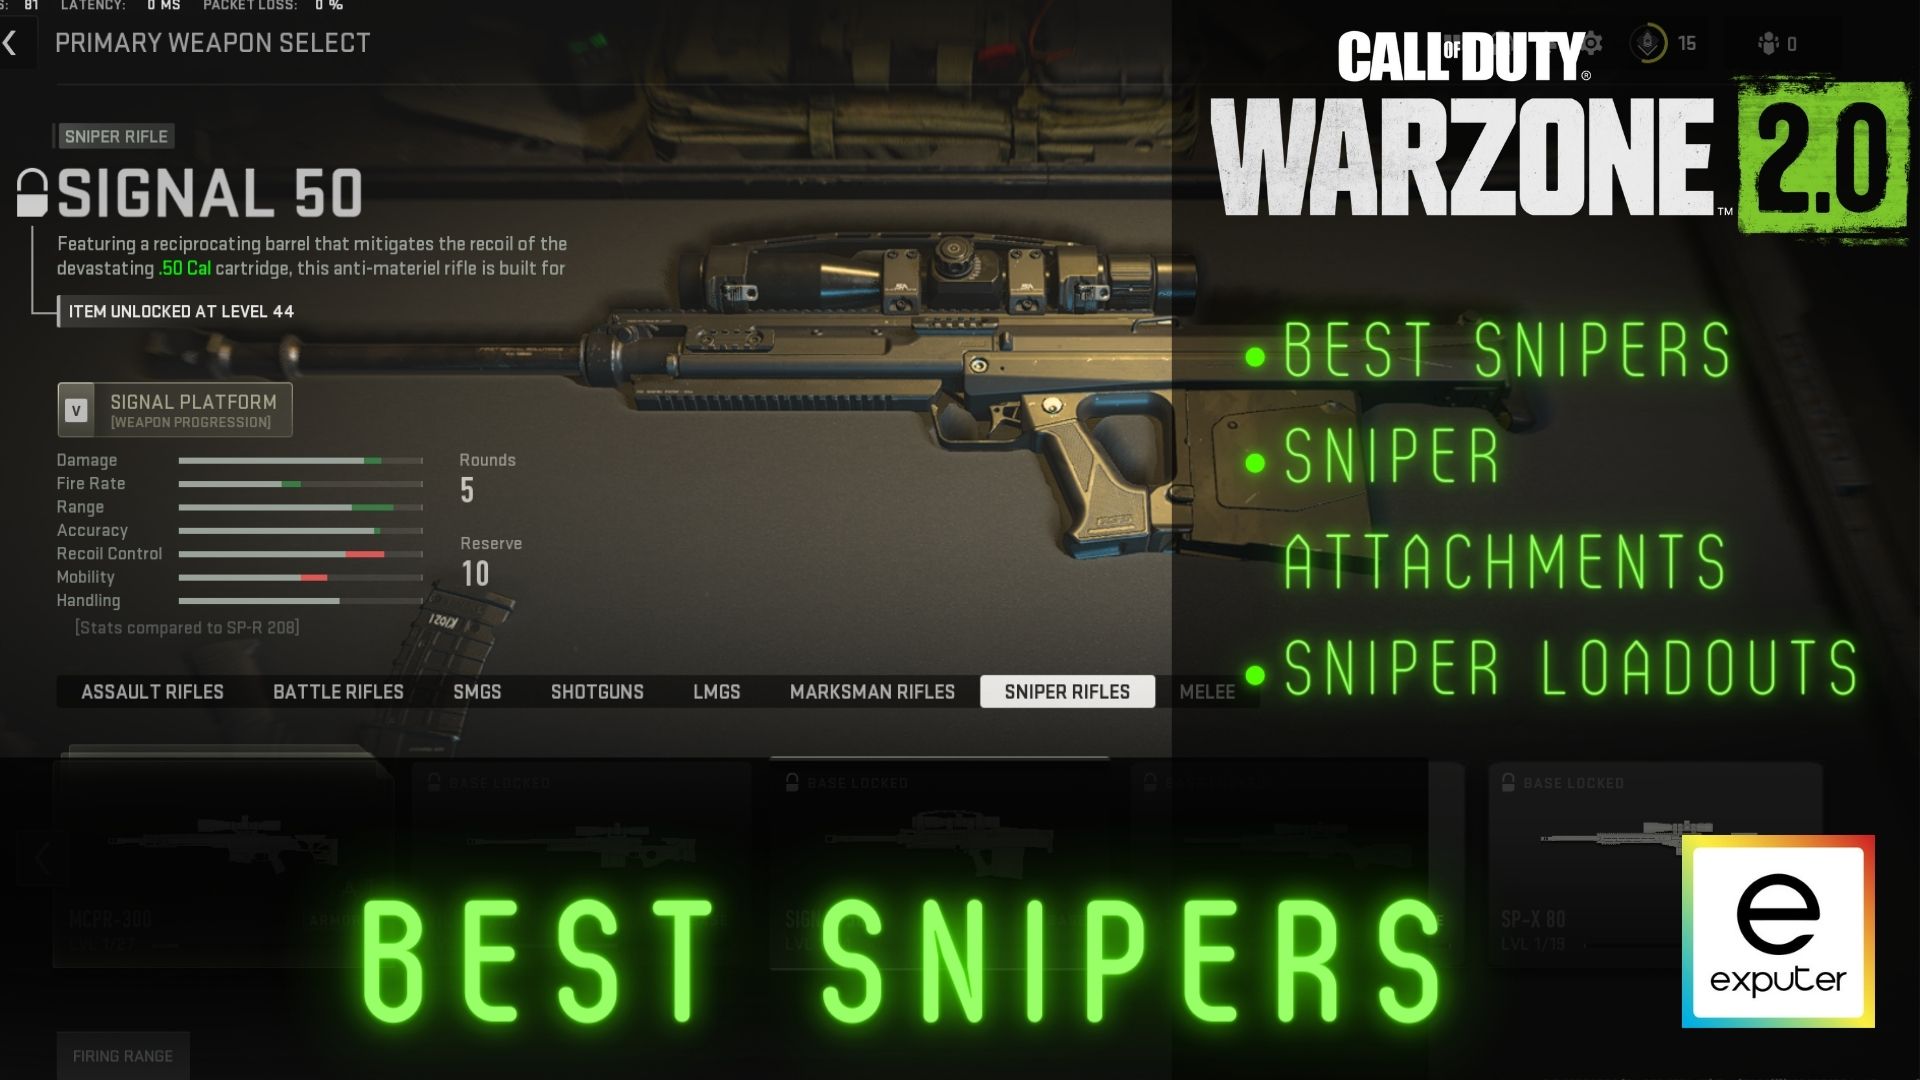 The Best Sniper Loadouts in Warzone 2 Season 6 - The SportsRush